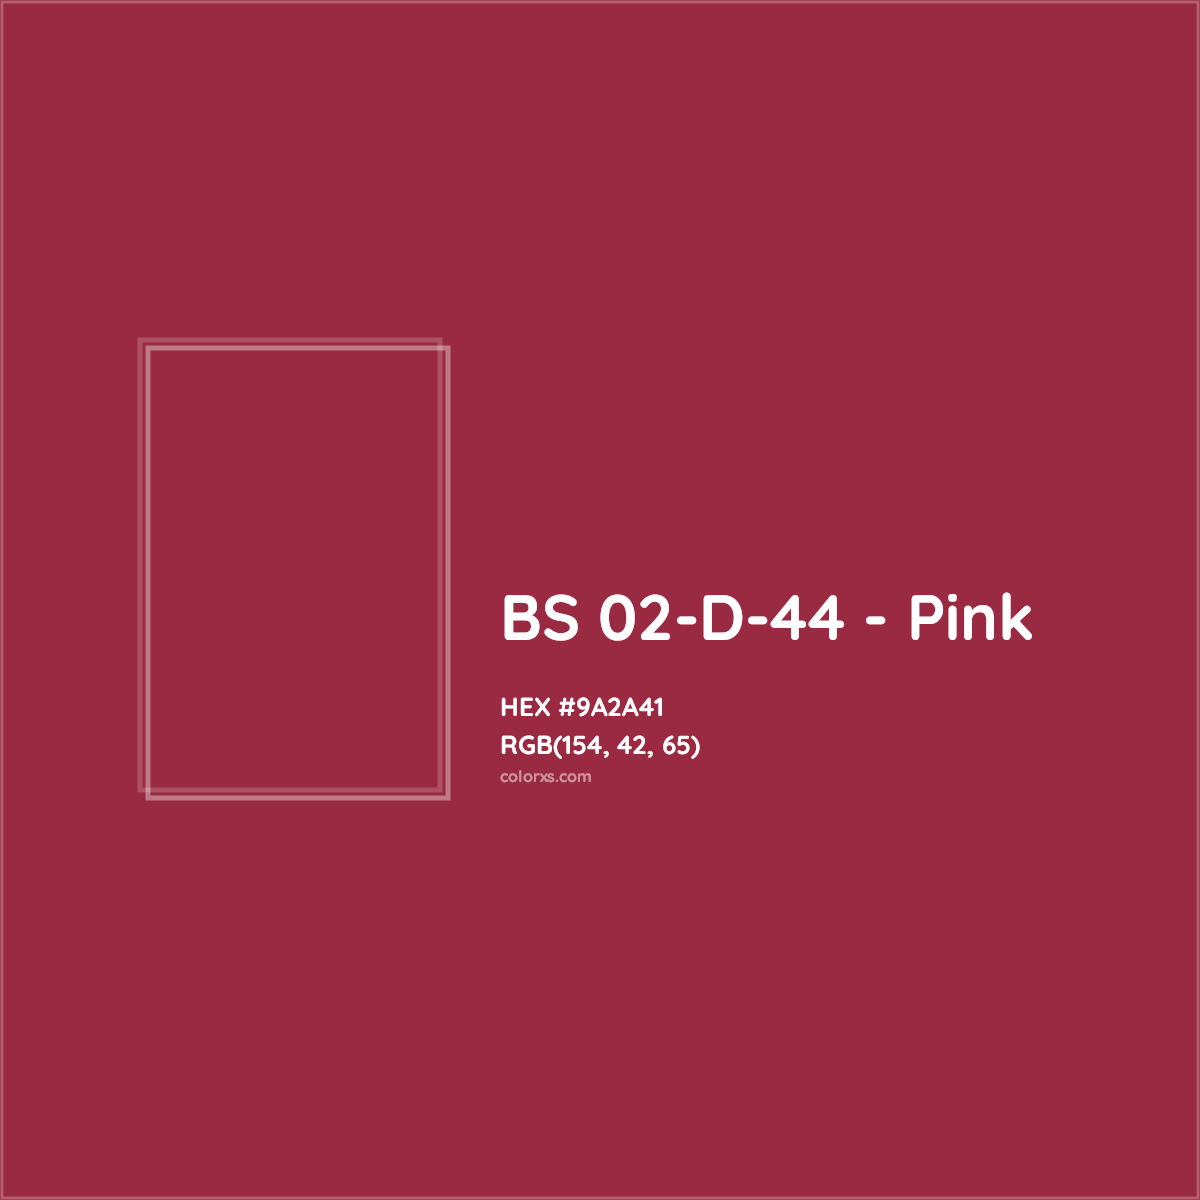 HEX #9A2A41 BS 02-D-44 - Pink CMS British Standard 4800 - Color Code